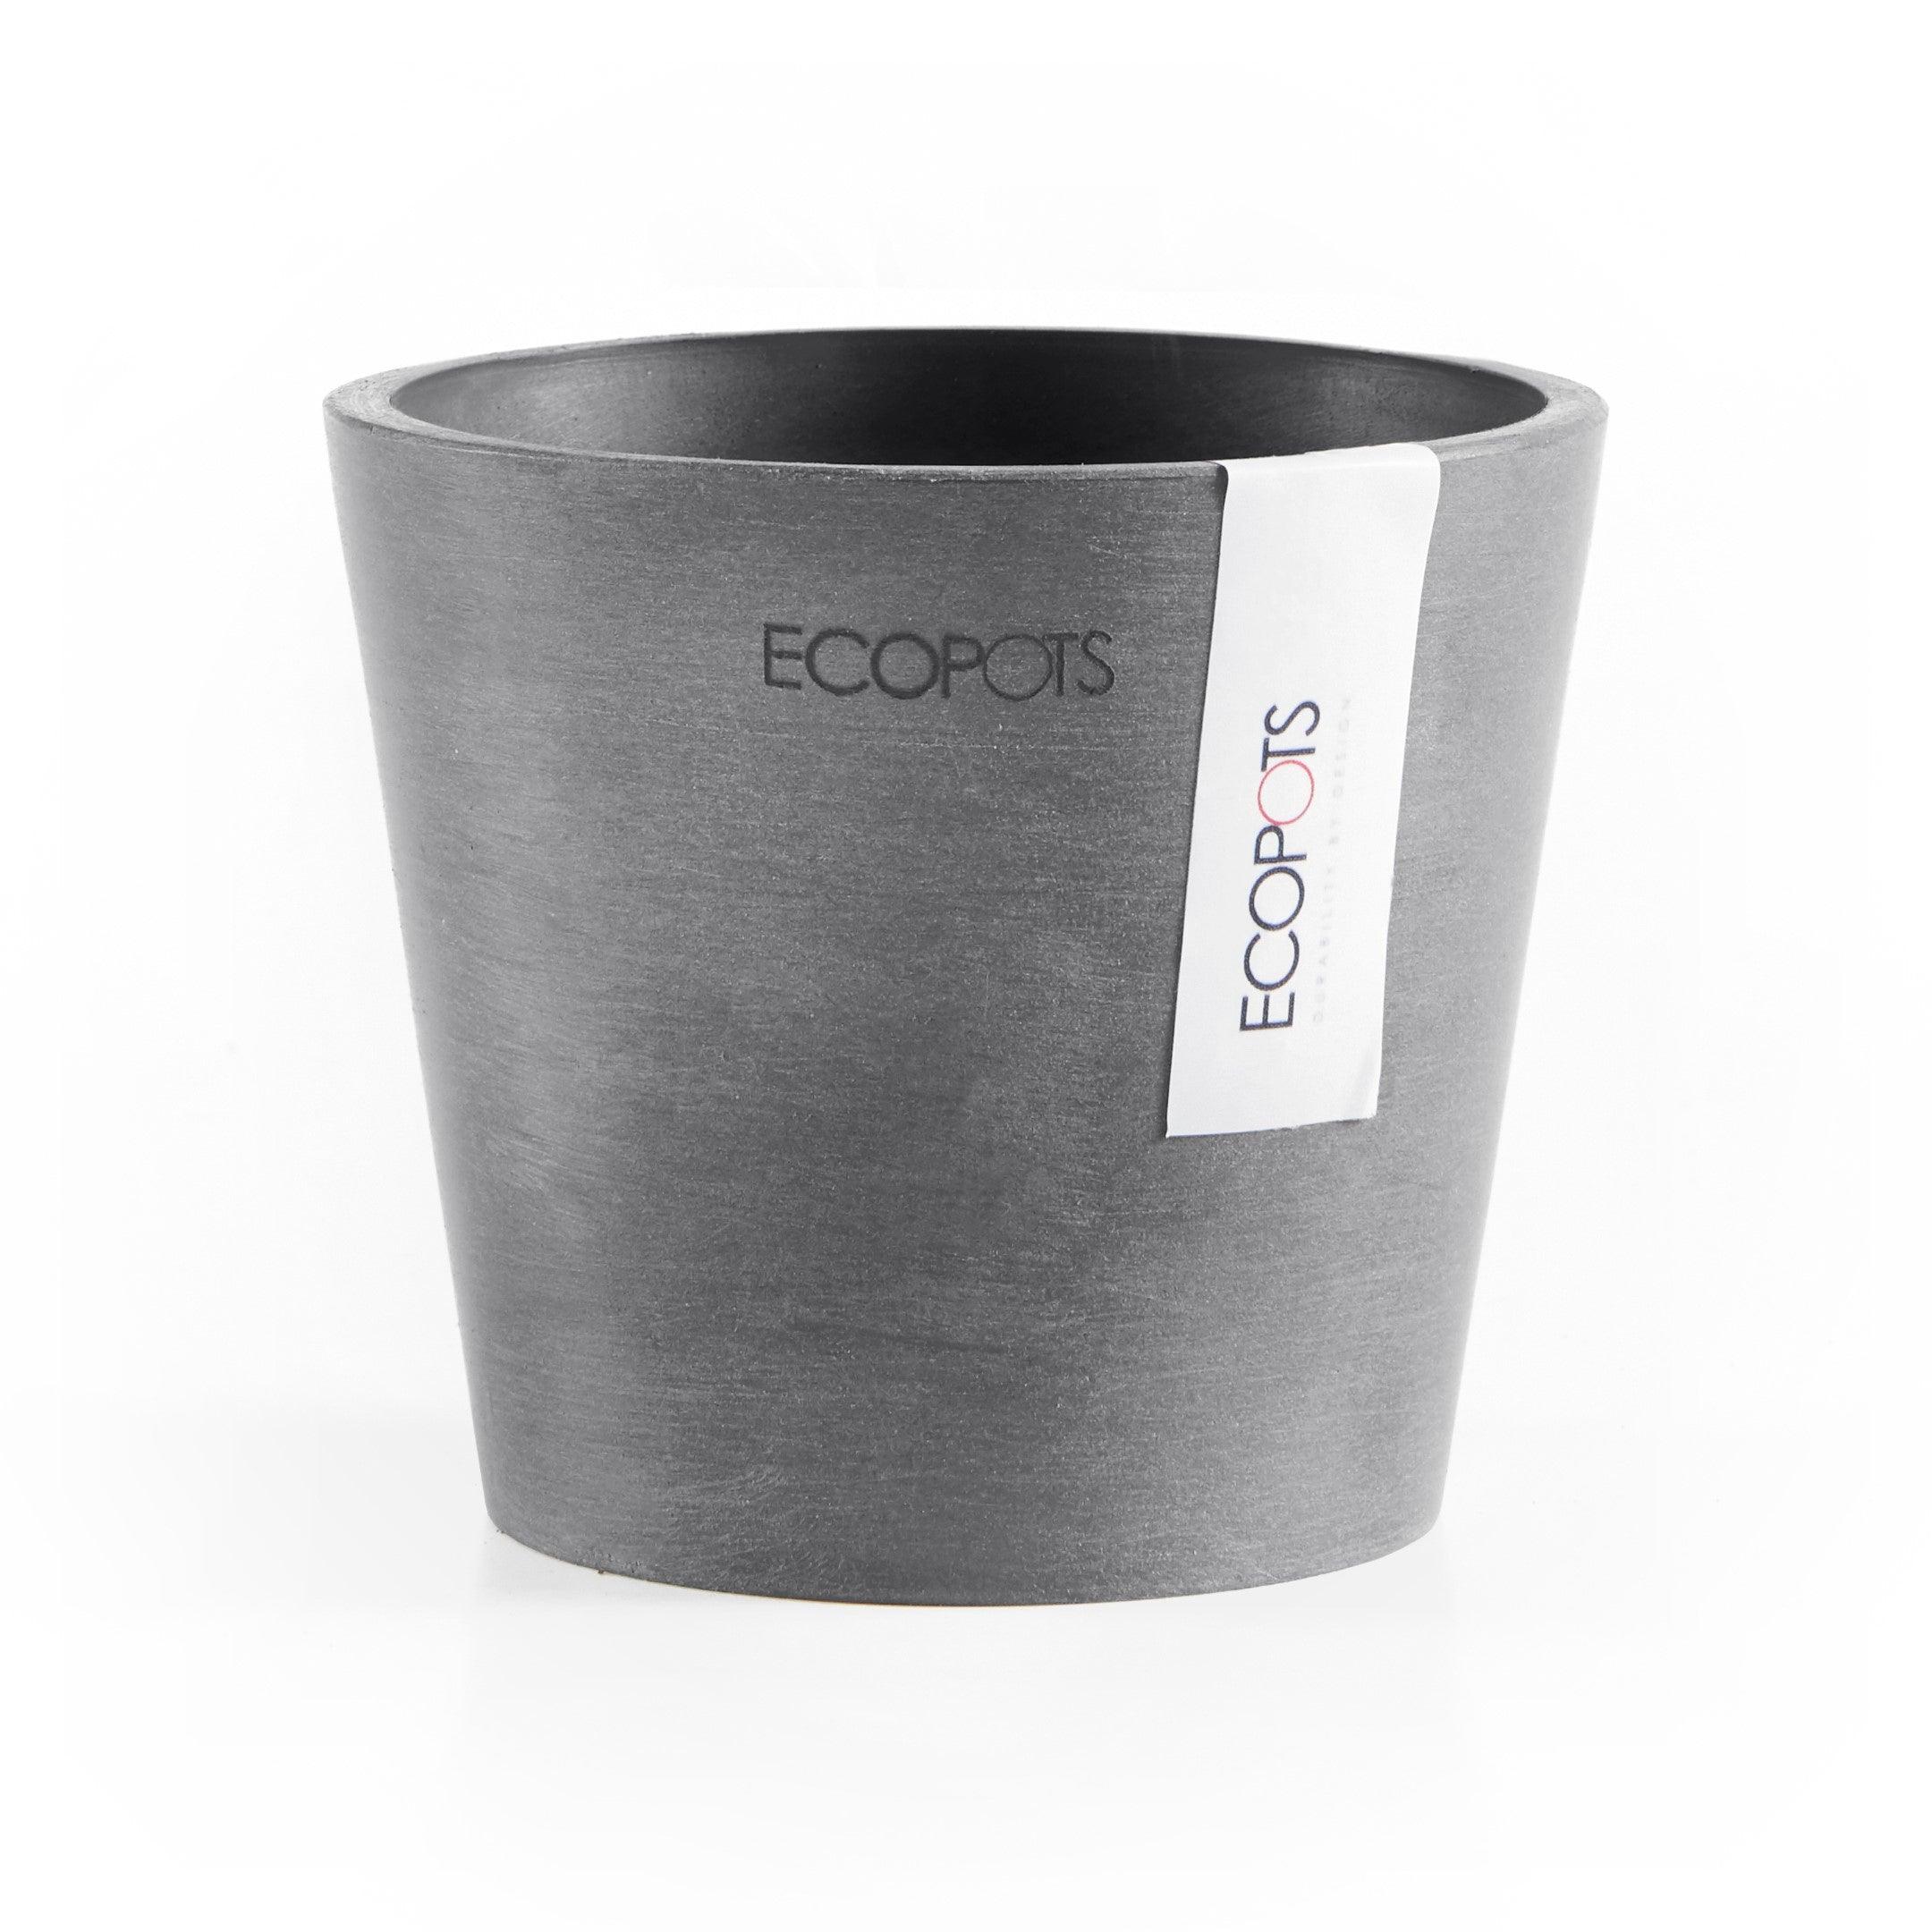 ECOPOTS Amsterdam Mini – Ecopots South Africa